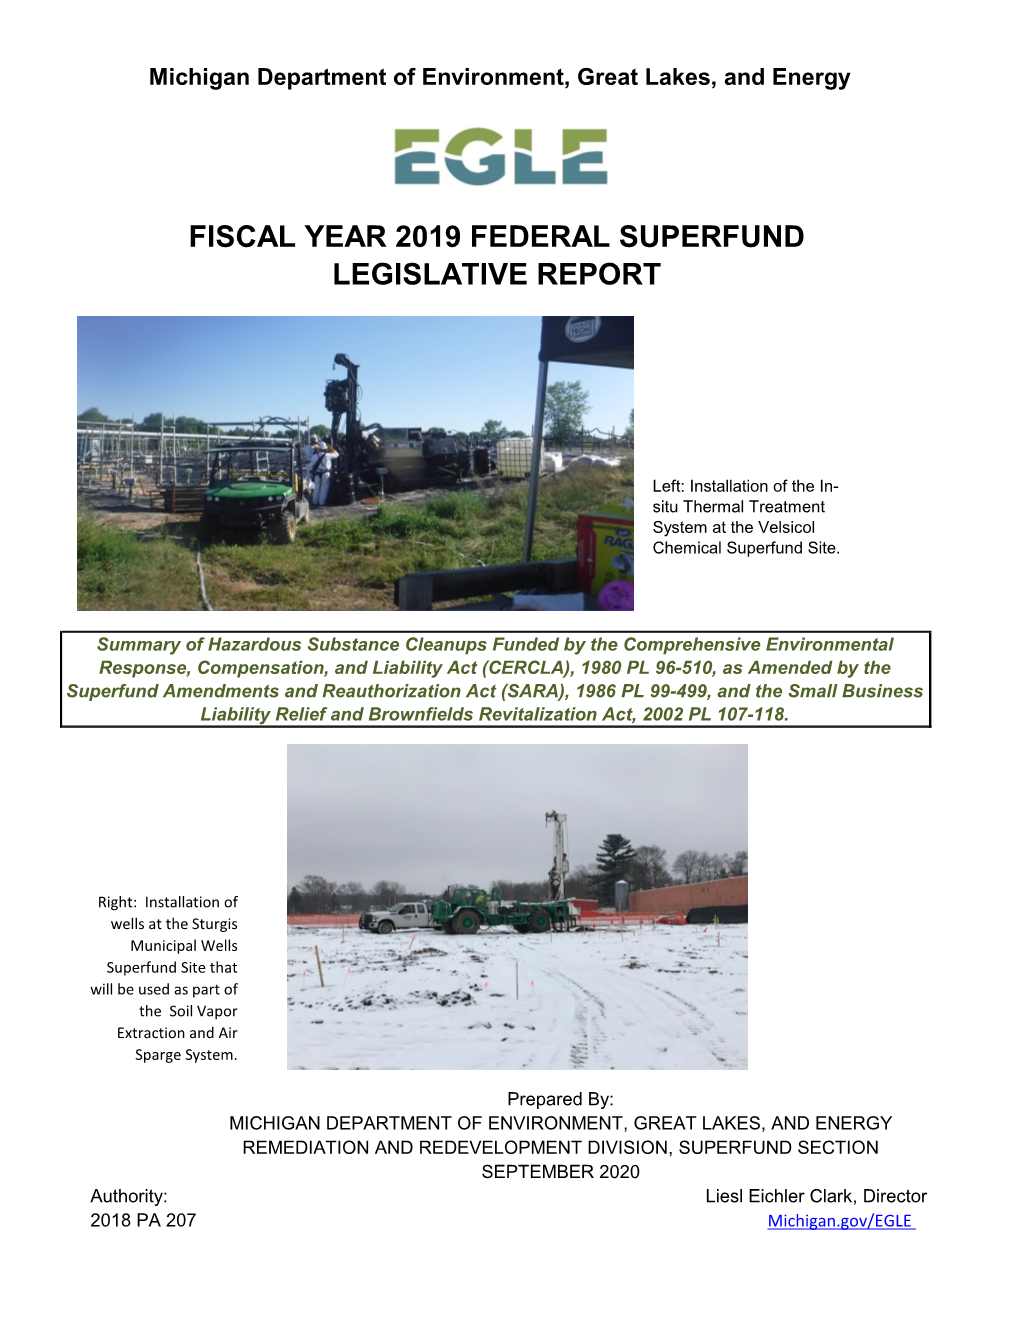 Michigan Federal Superfund Program Legislative Report for FY 2019